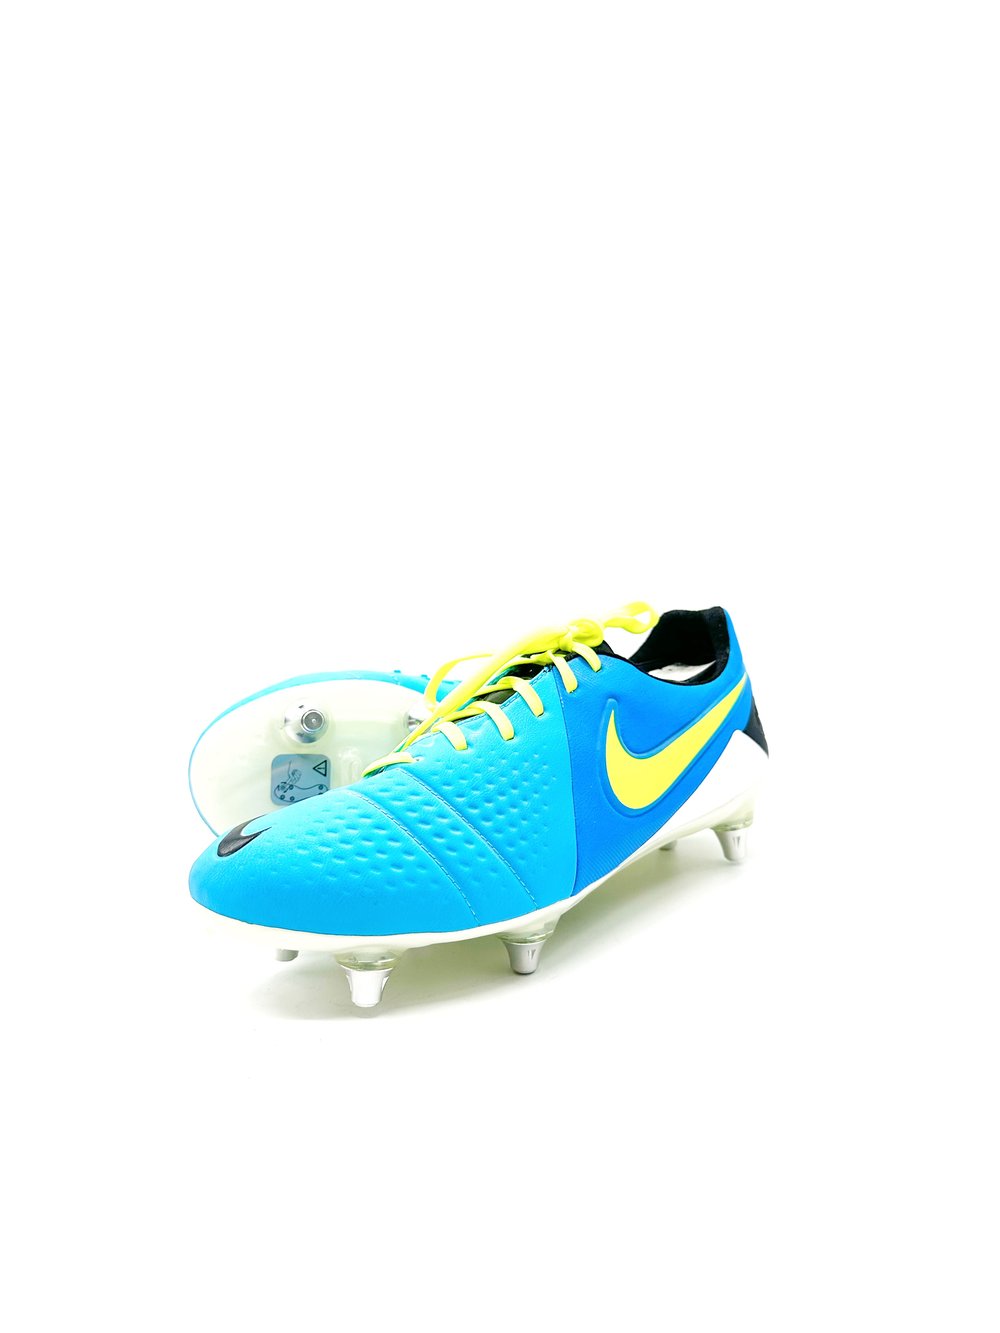 Image of Nike Ctr360 Maestri SG sample 